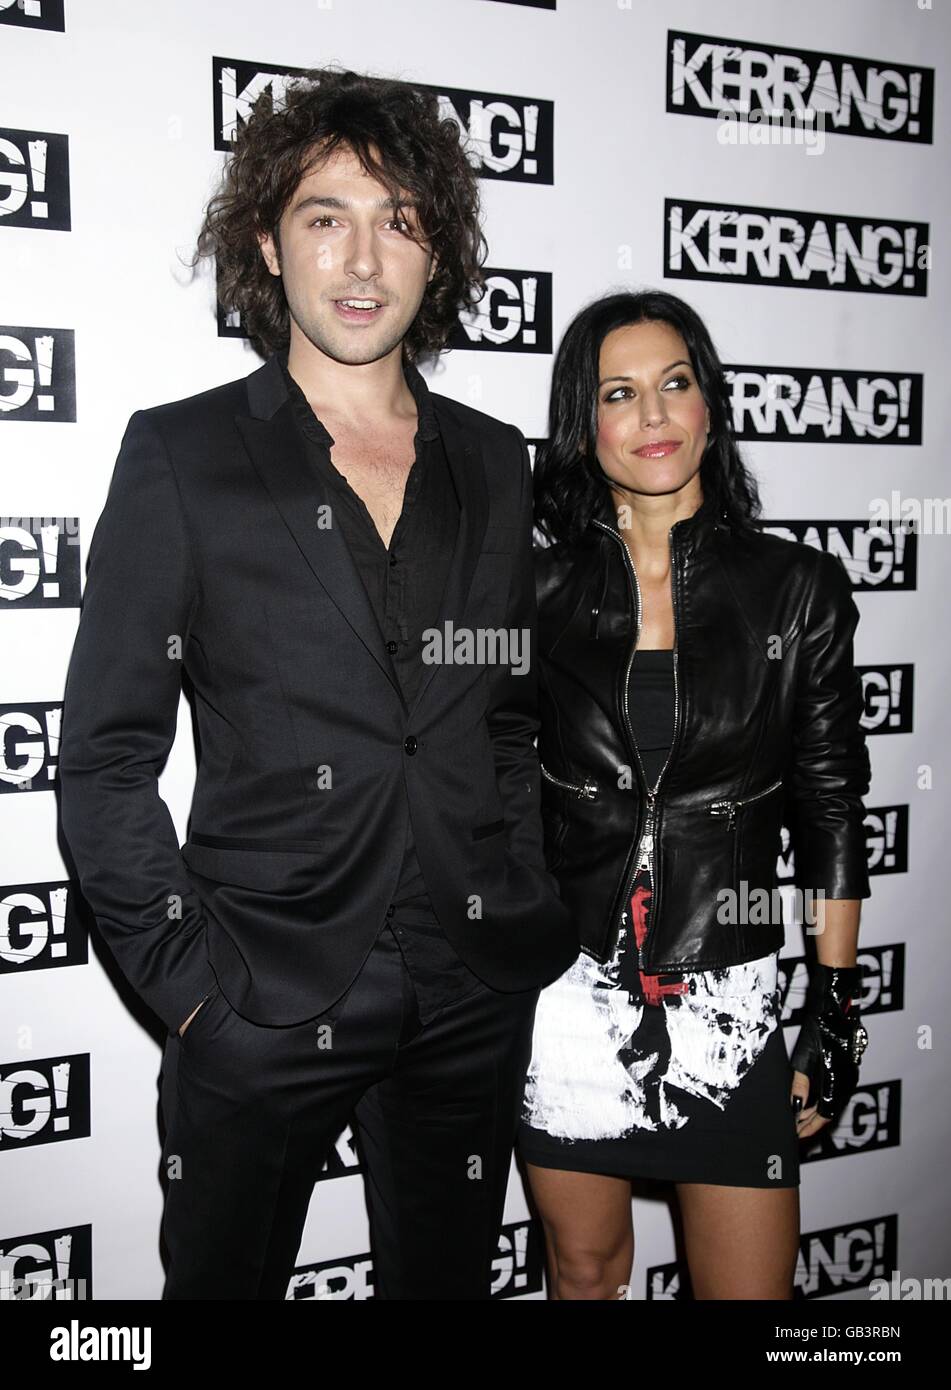 Kerrang Awards 2008 - London Stock Photo